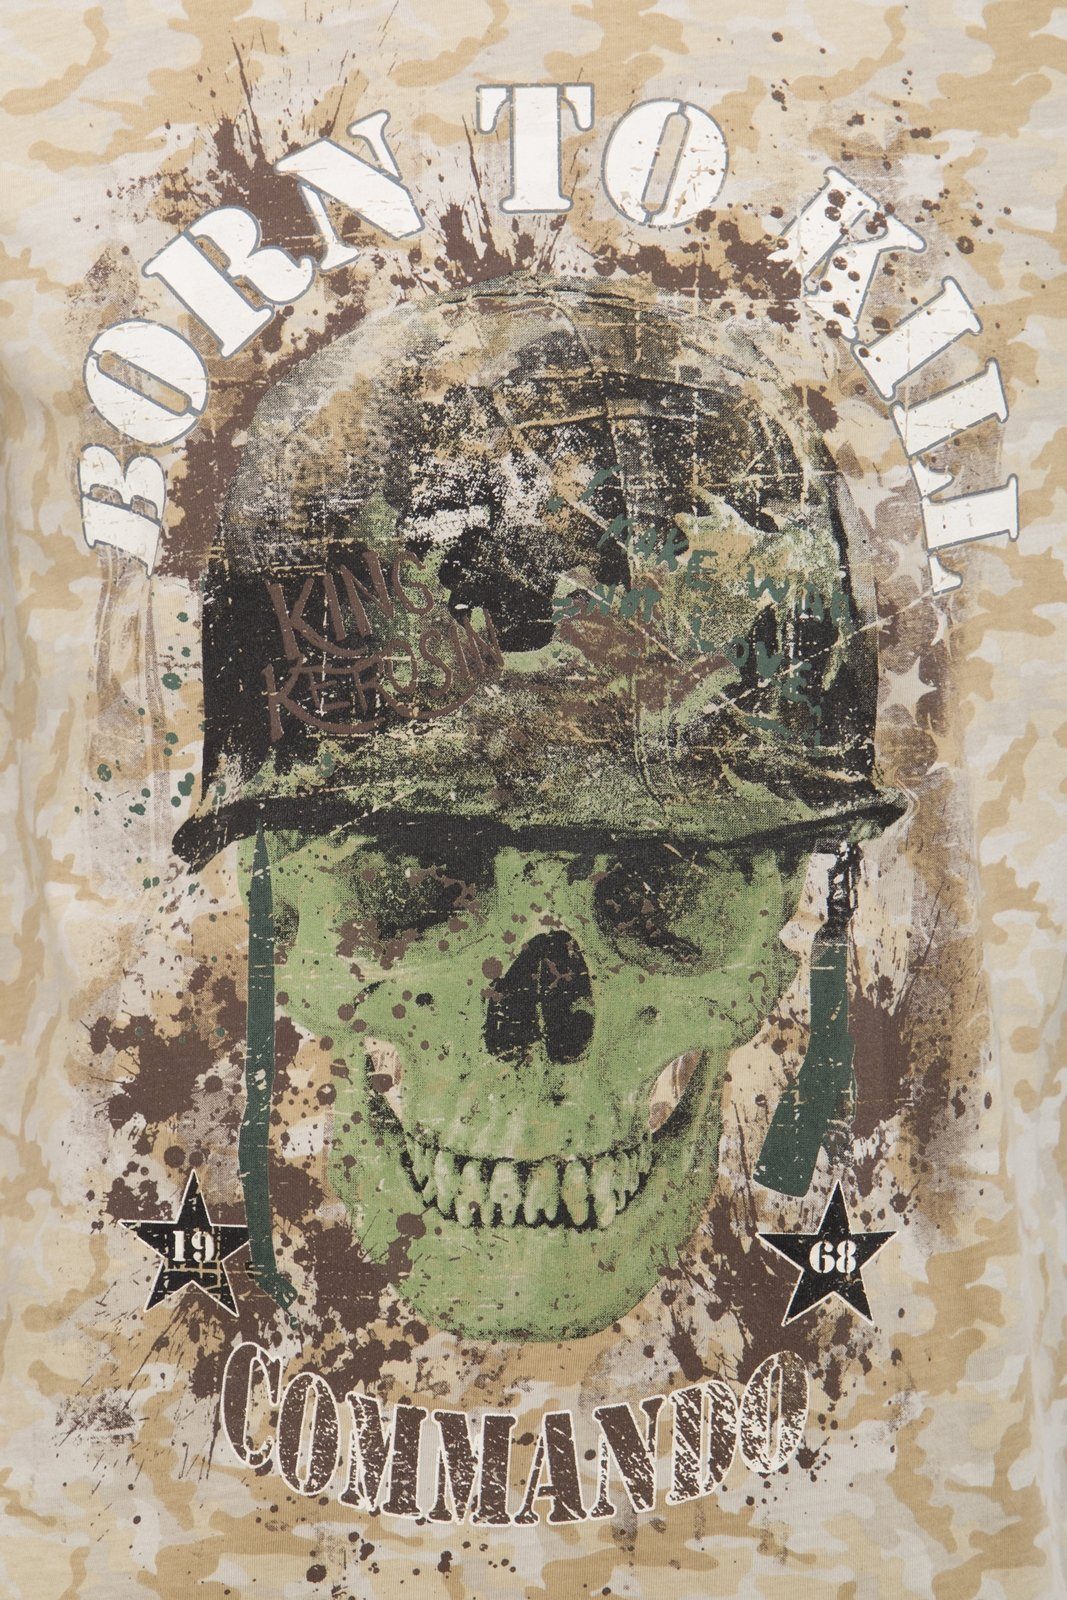 kill mit core KingKerosin und Skull-Motiv to Tarn-Alloverprint T-Shirt born